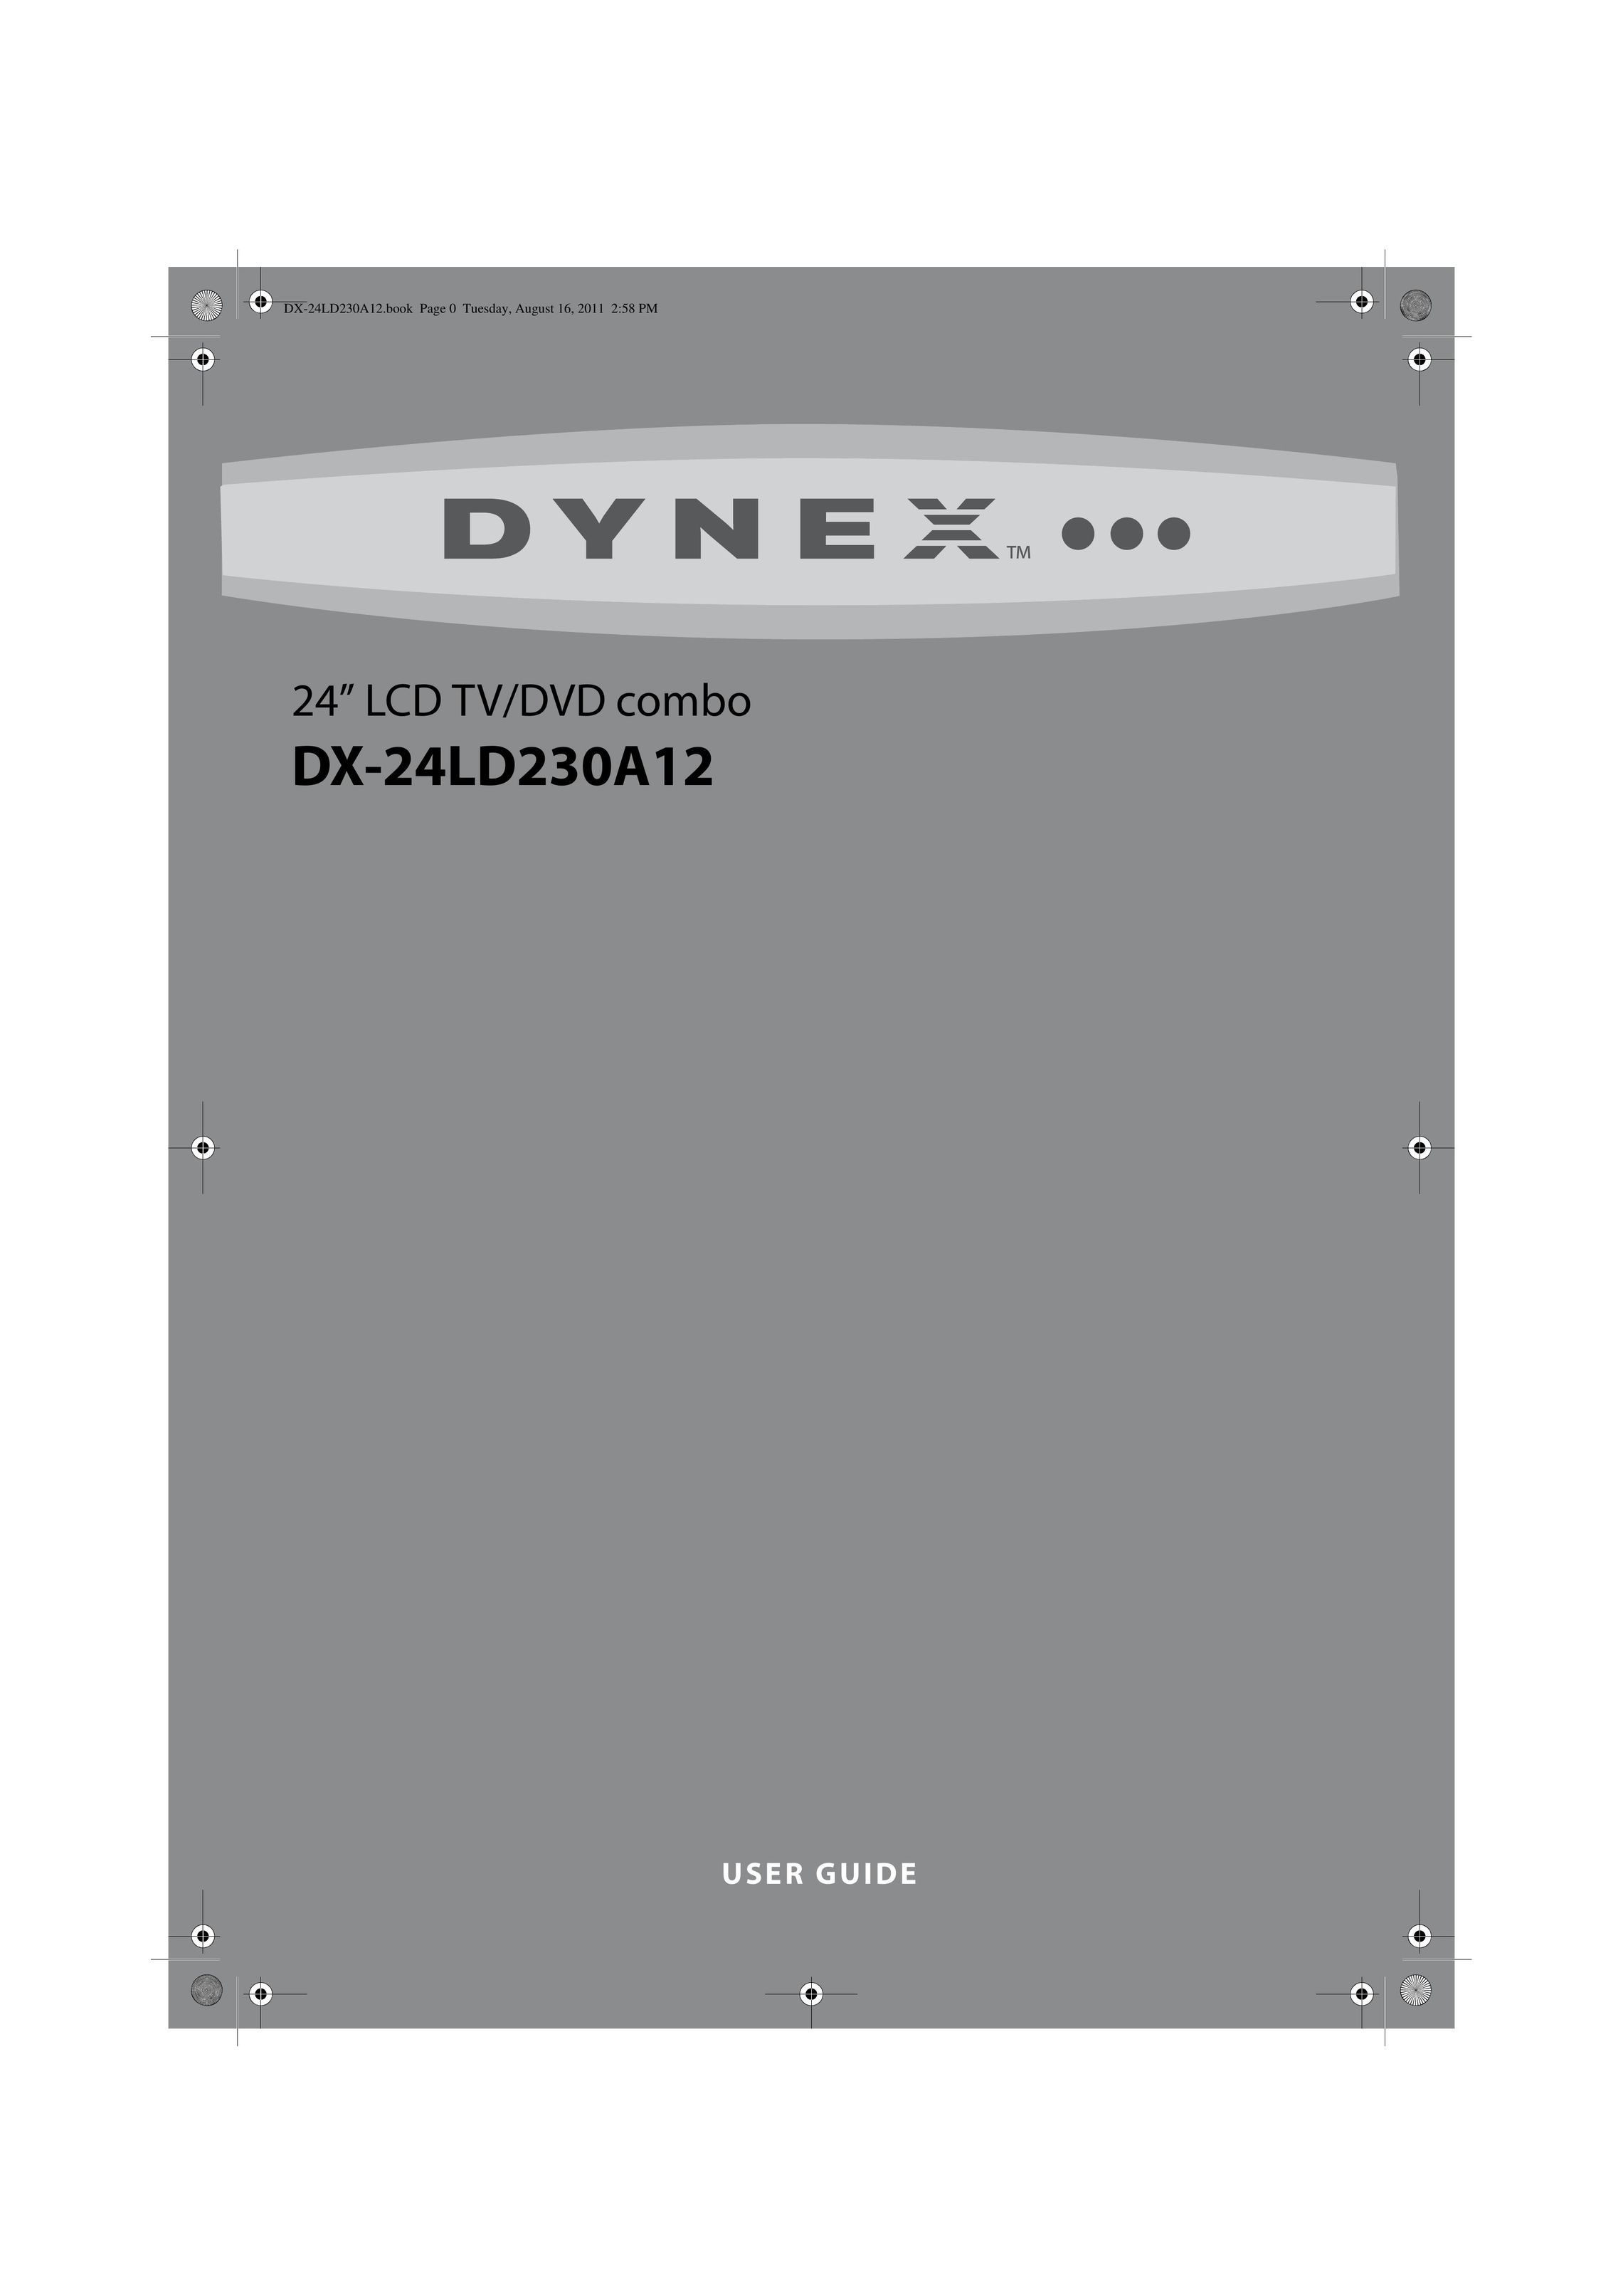 Dynex DX-24LD230A12 TV DVD Combo User Manual